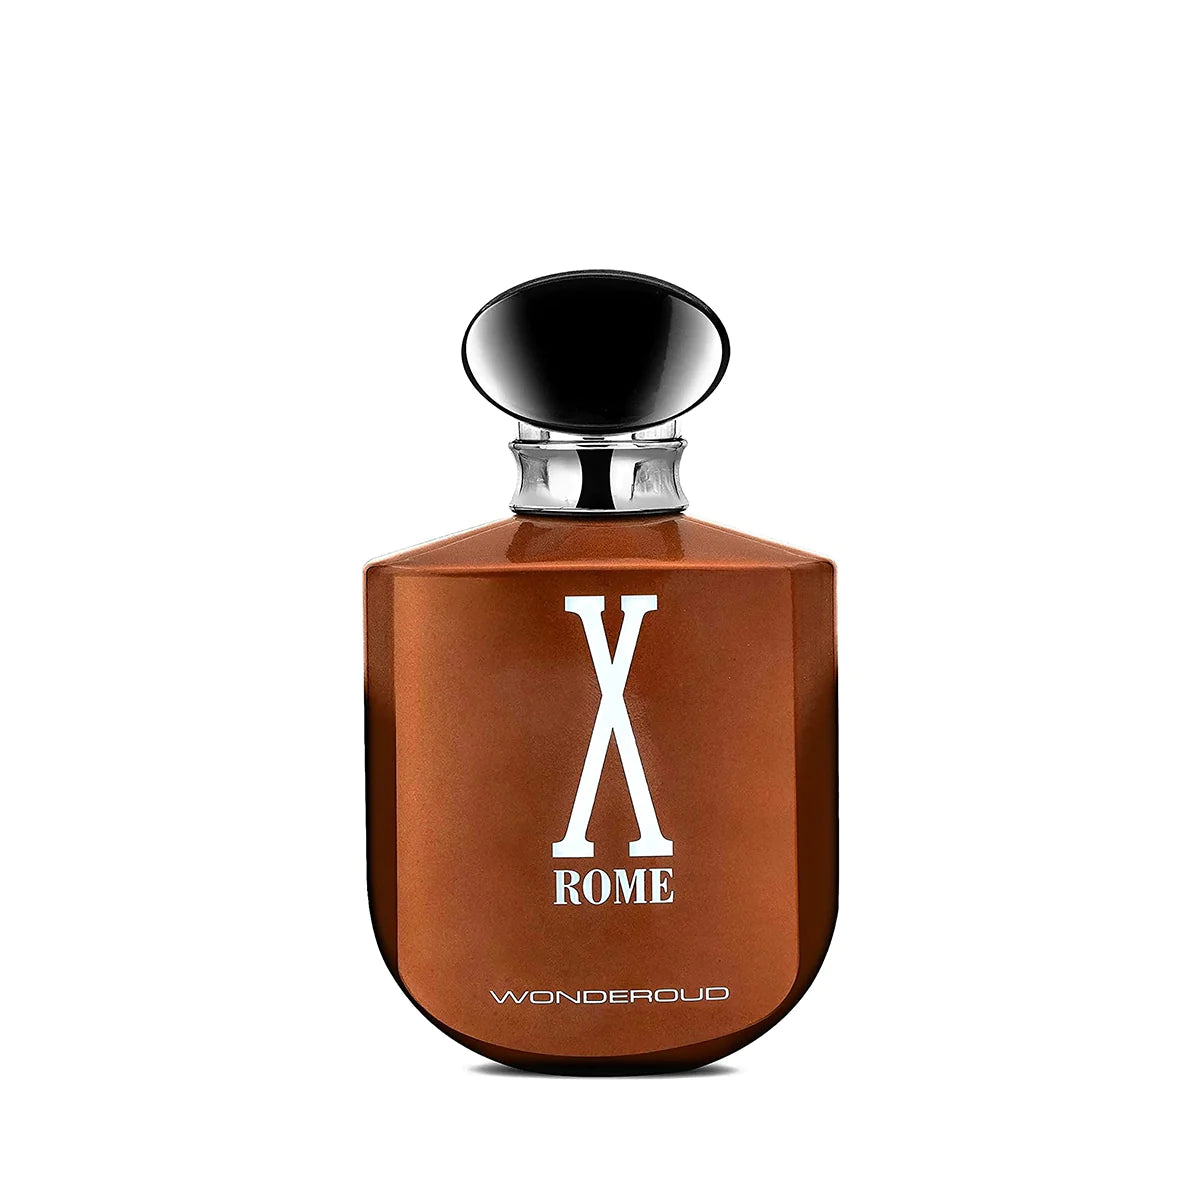 X Rome Wonderoud | Eau De Parfume 100ml | by Fragrance World